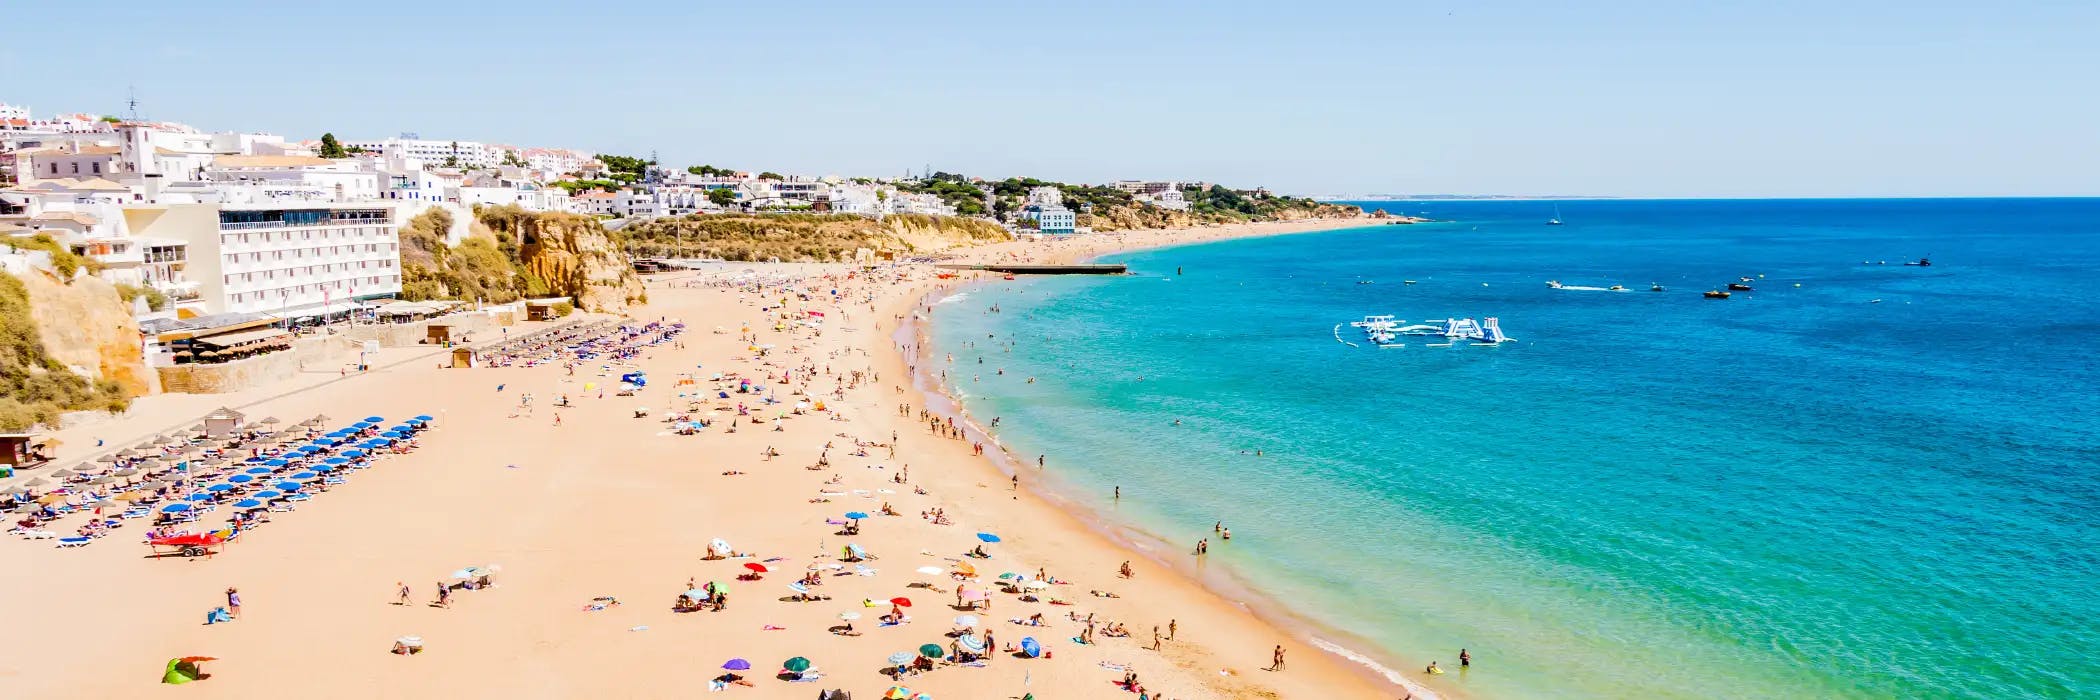 Algarve - Holidays Under £300